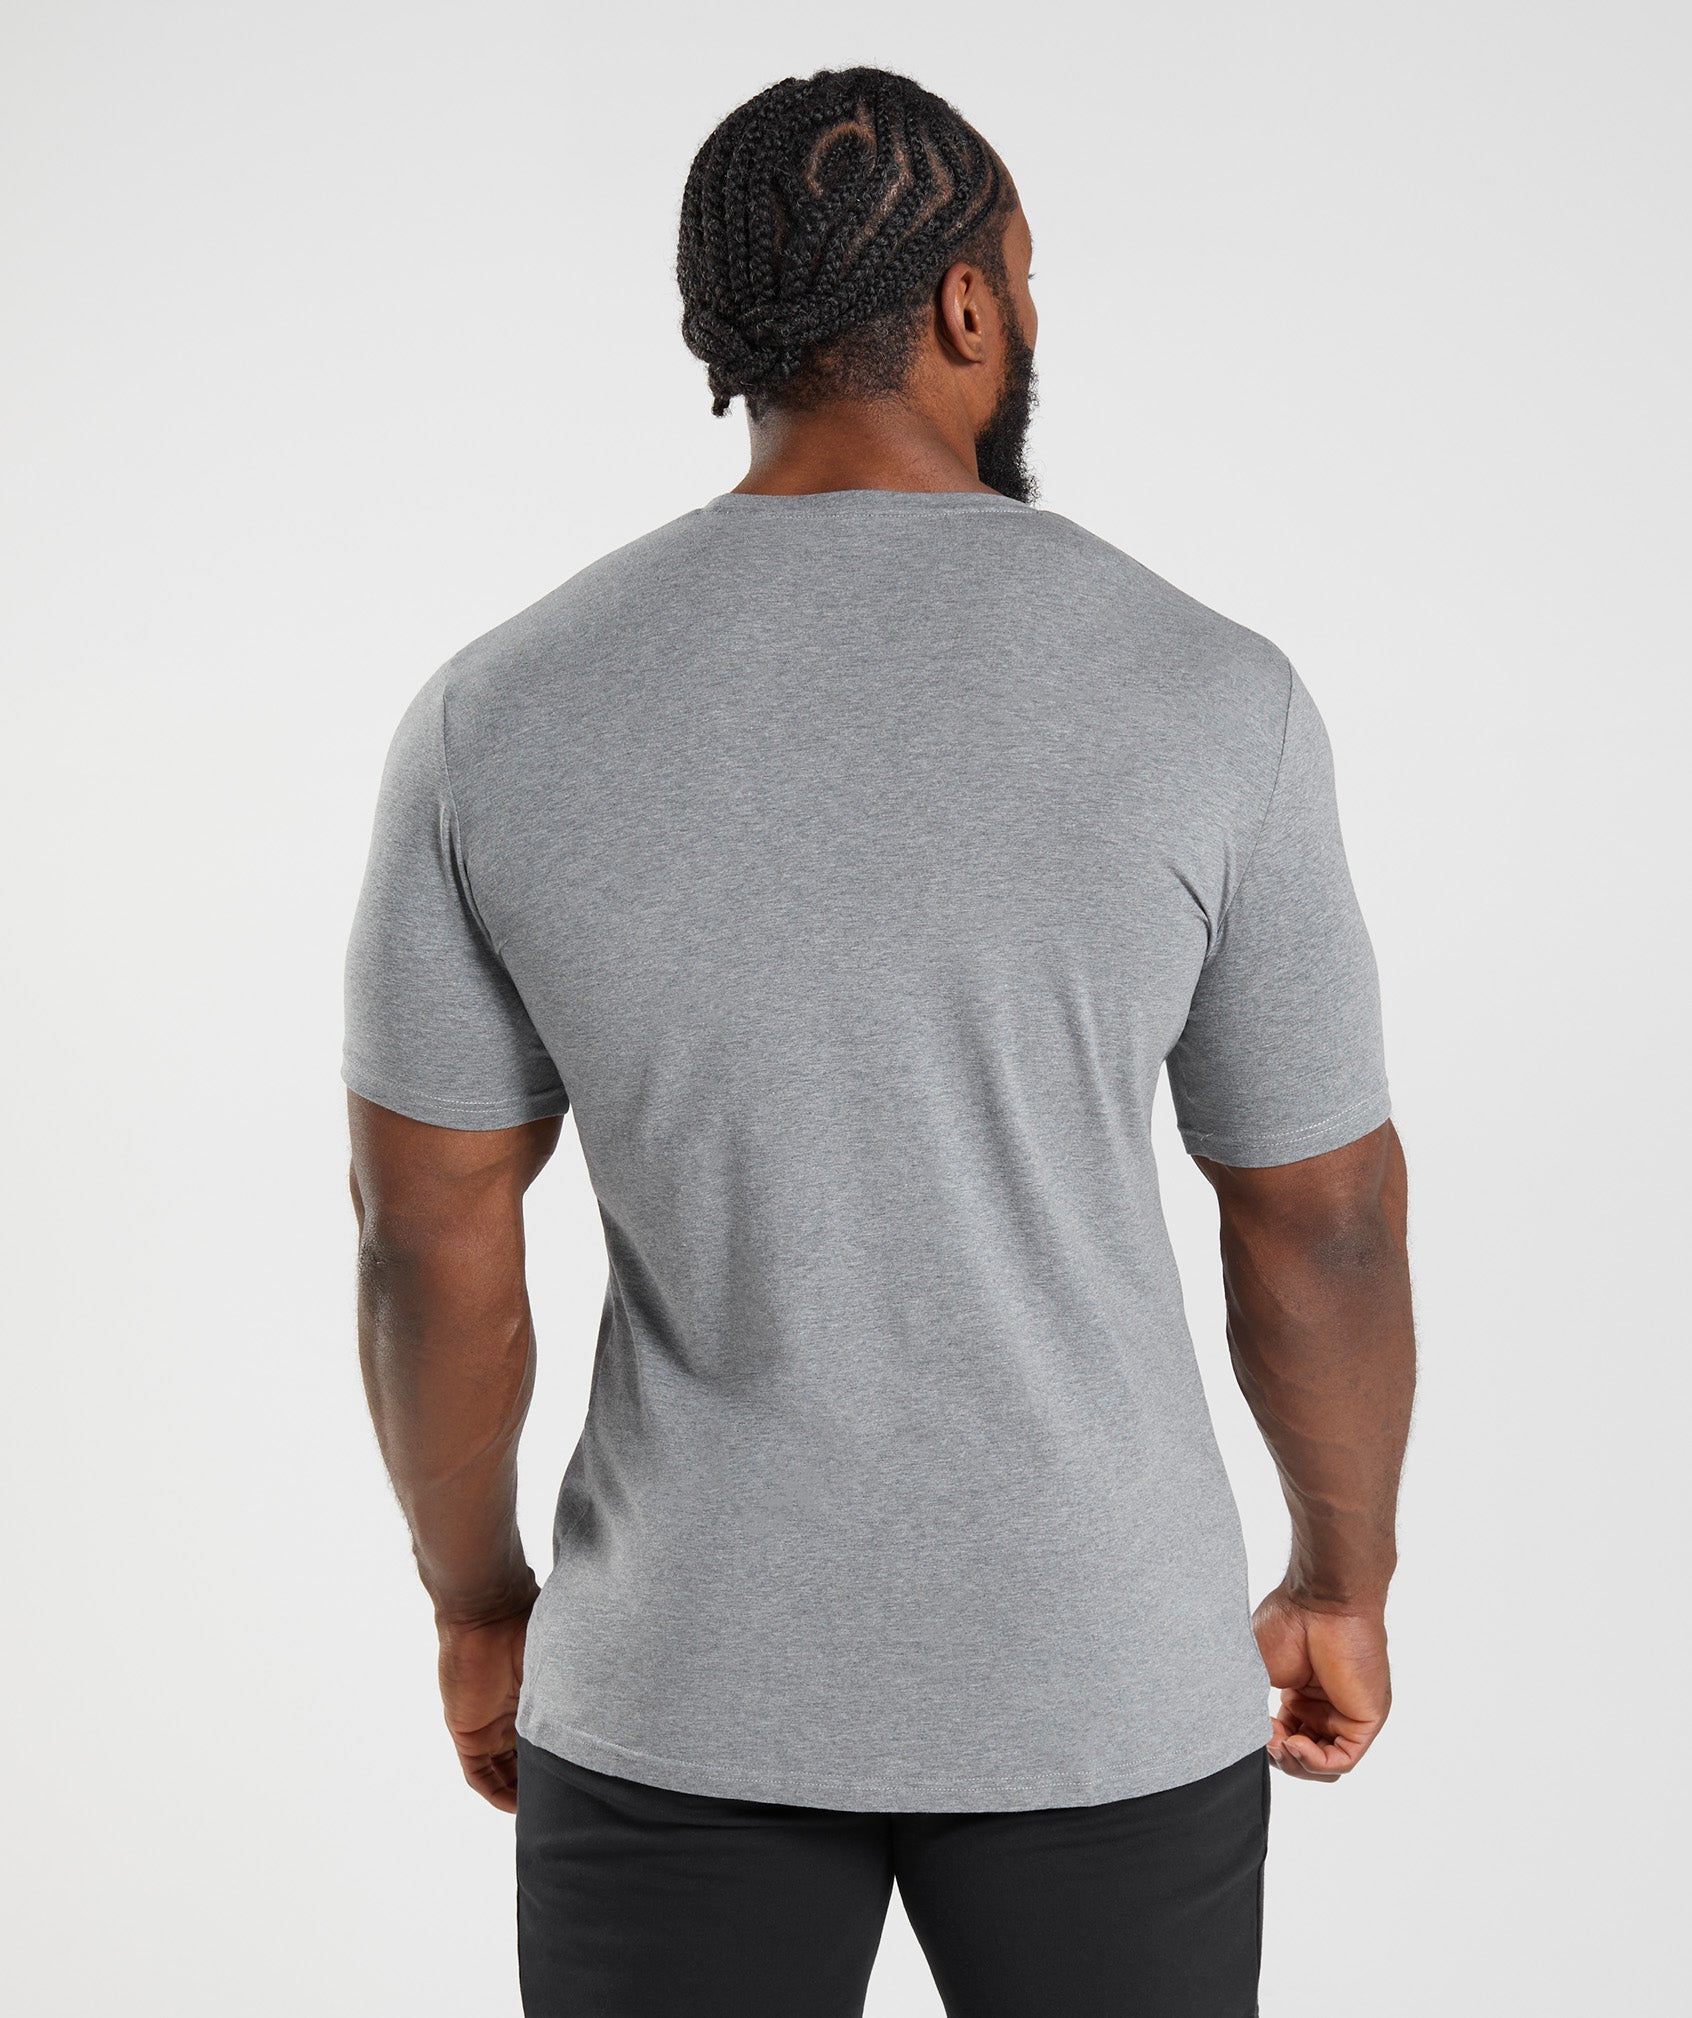 Gymshark Essential T-Shirt - Black